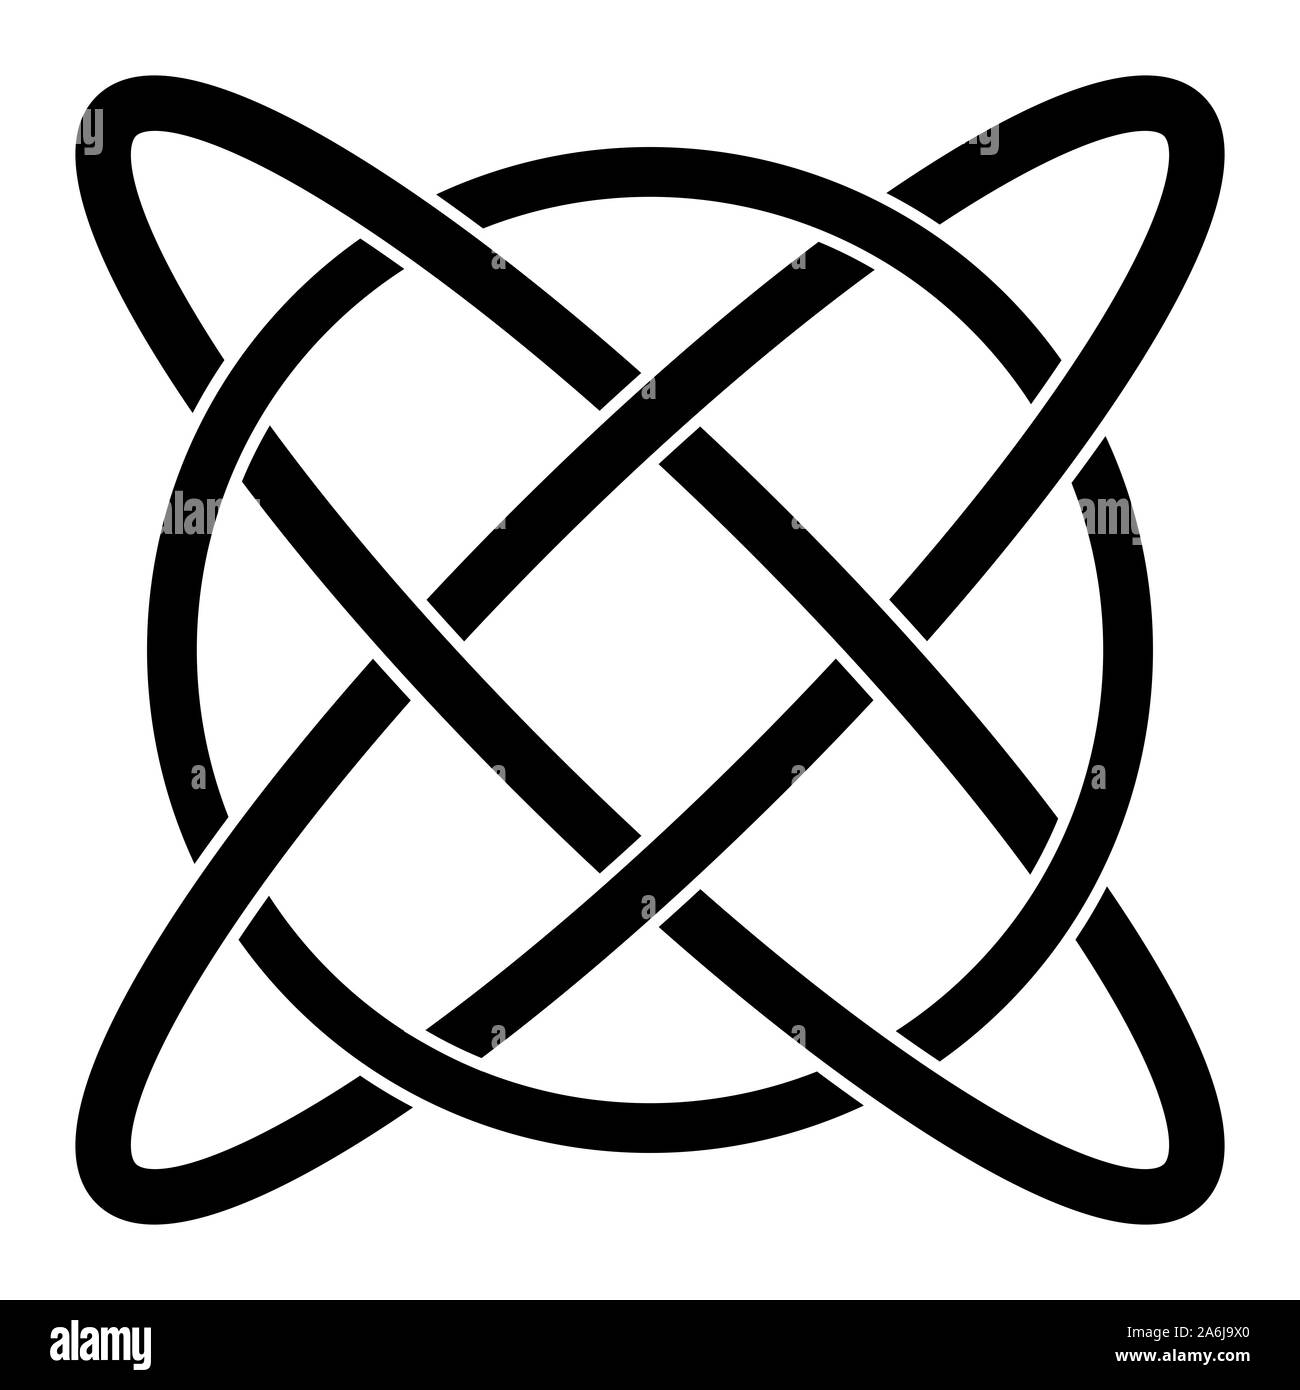 Celtic knot circular symbol Stock Photo